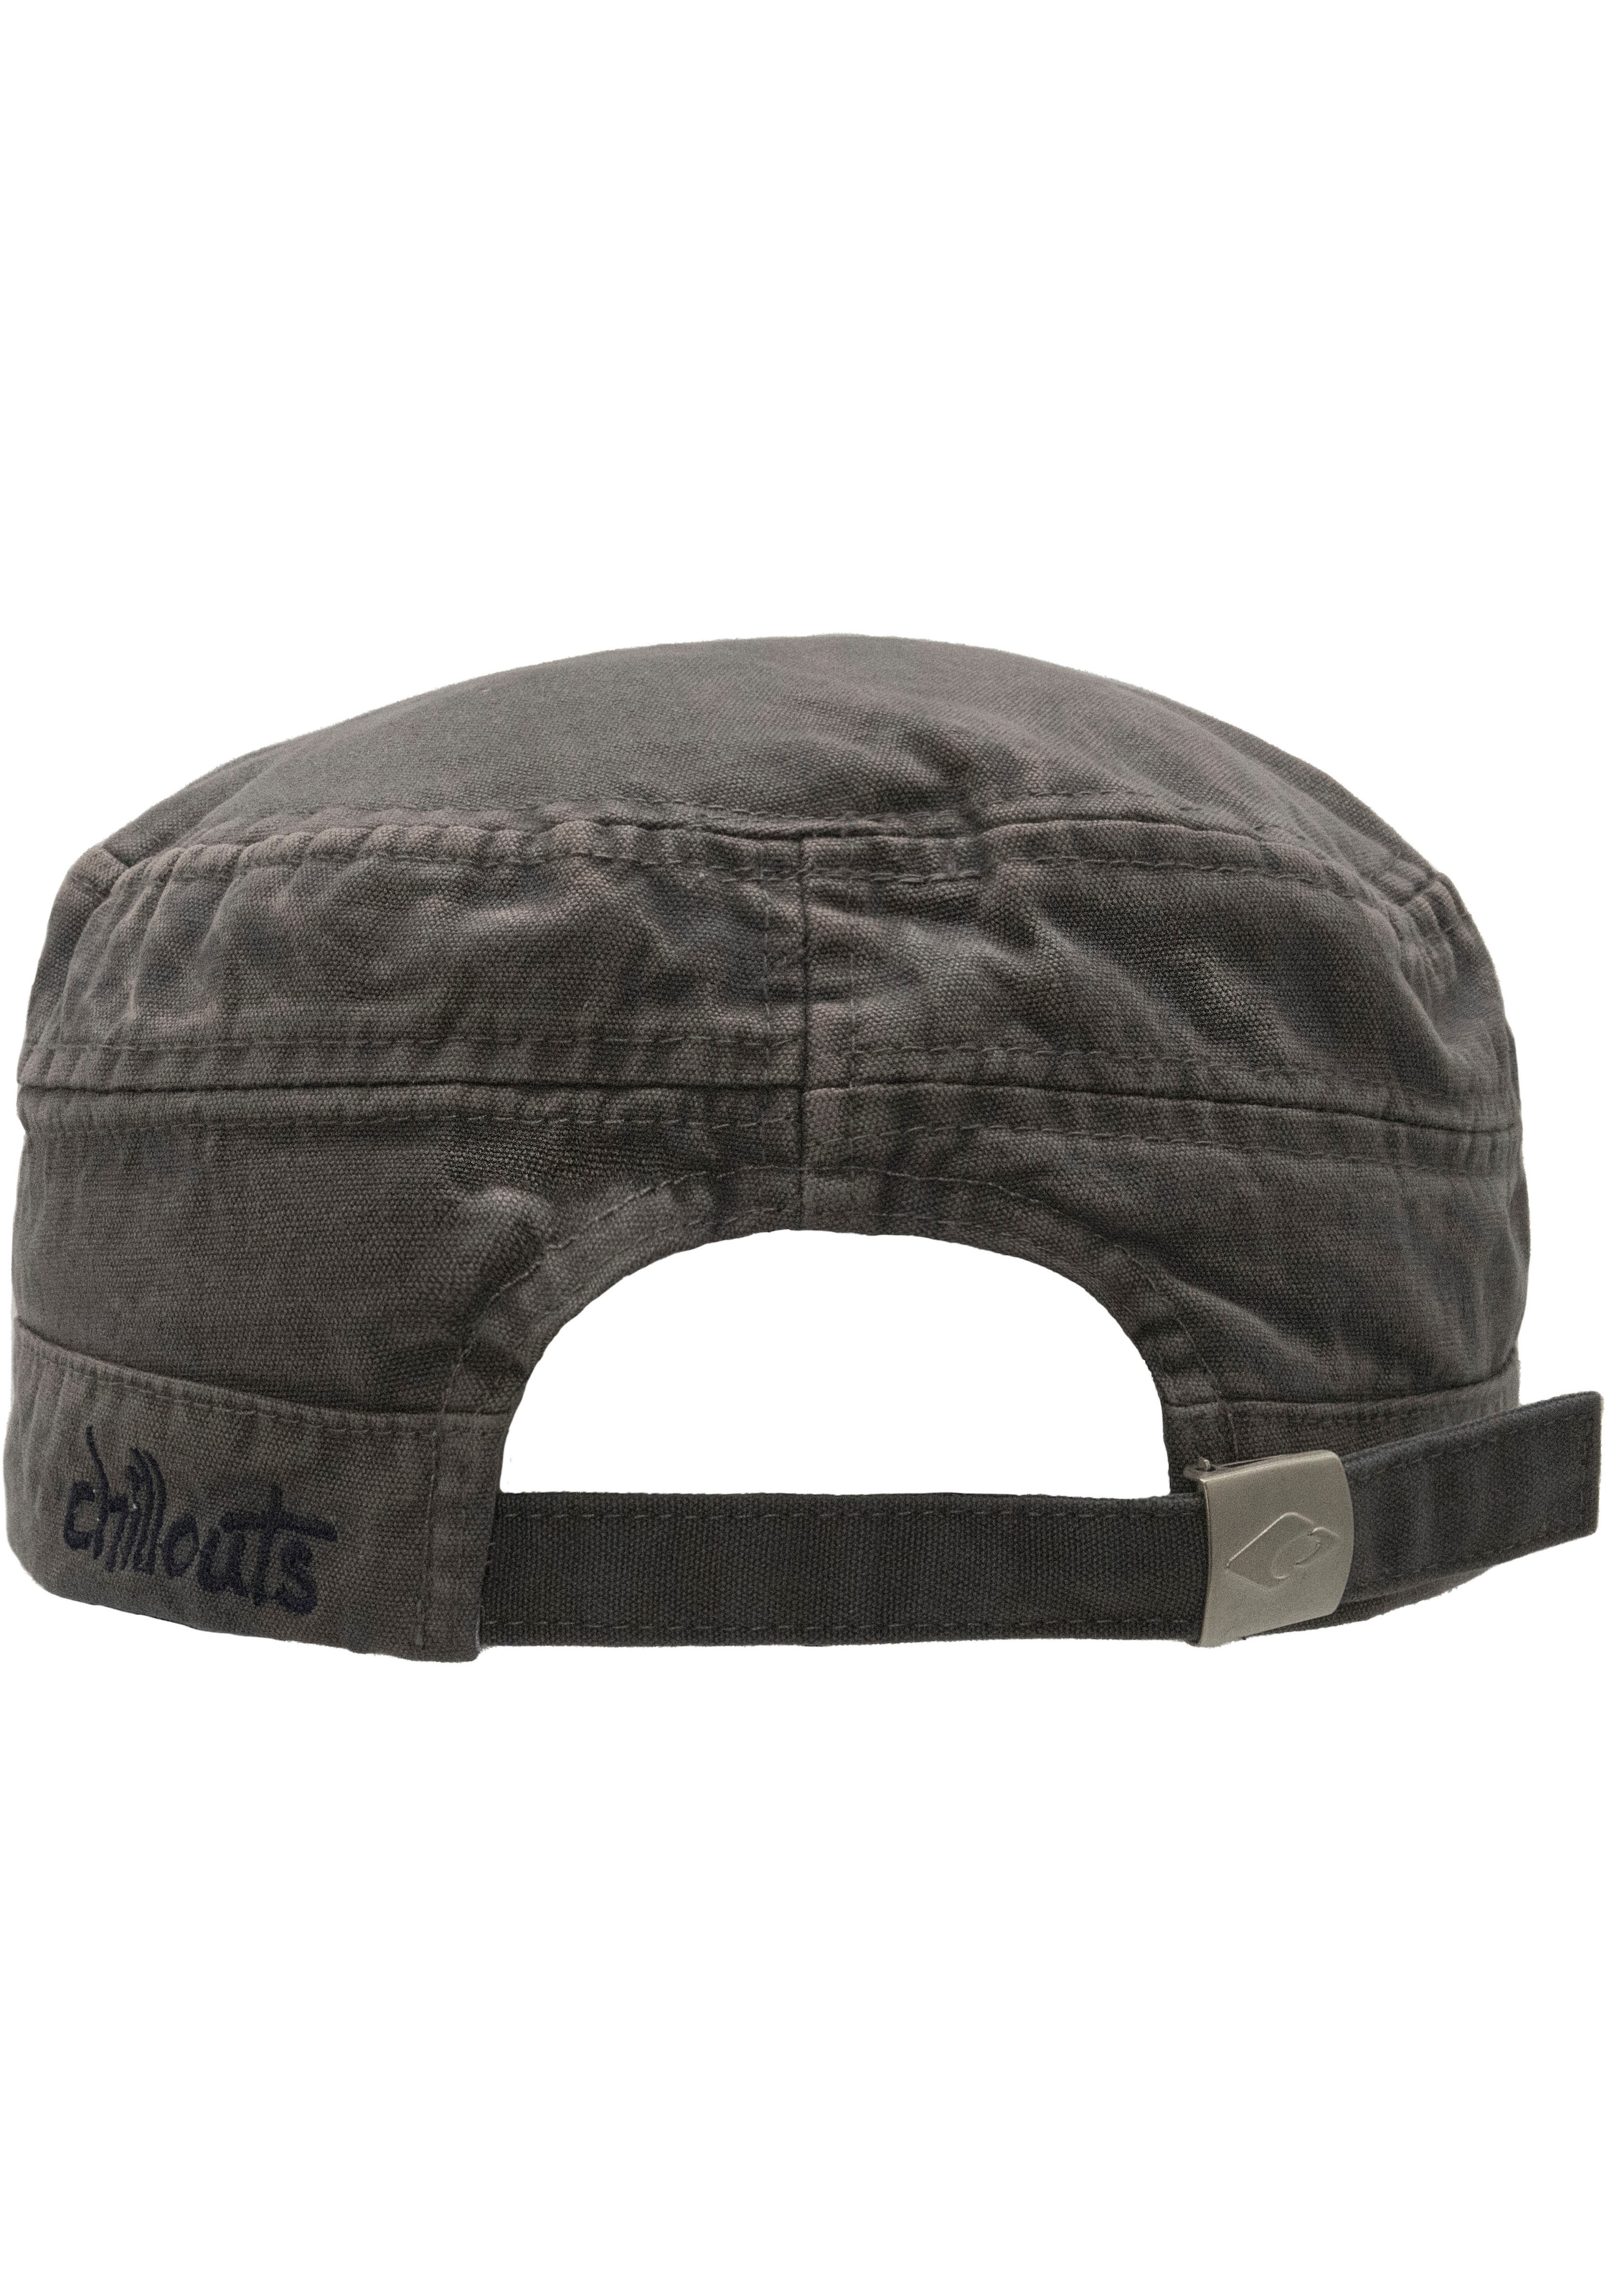 aus Paso reiner shoppen Army online Baumwolle, »El OTTO Hat«, One atmungsaktiv, Size chillouts Cap bei